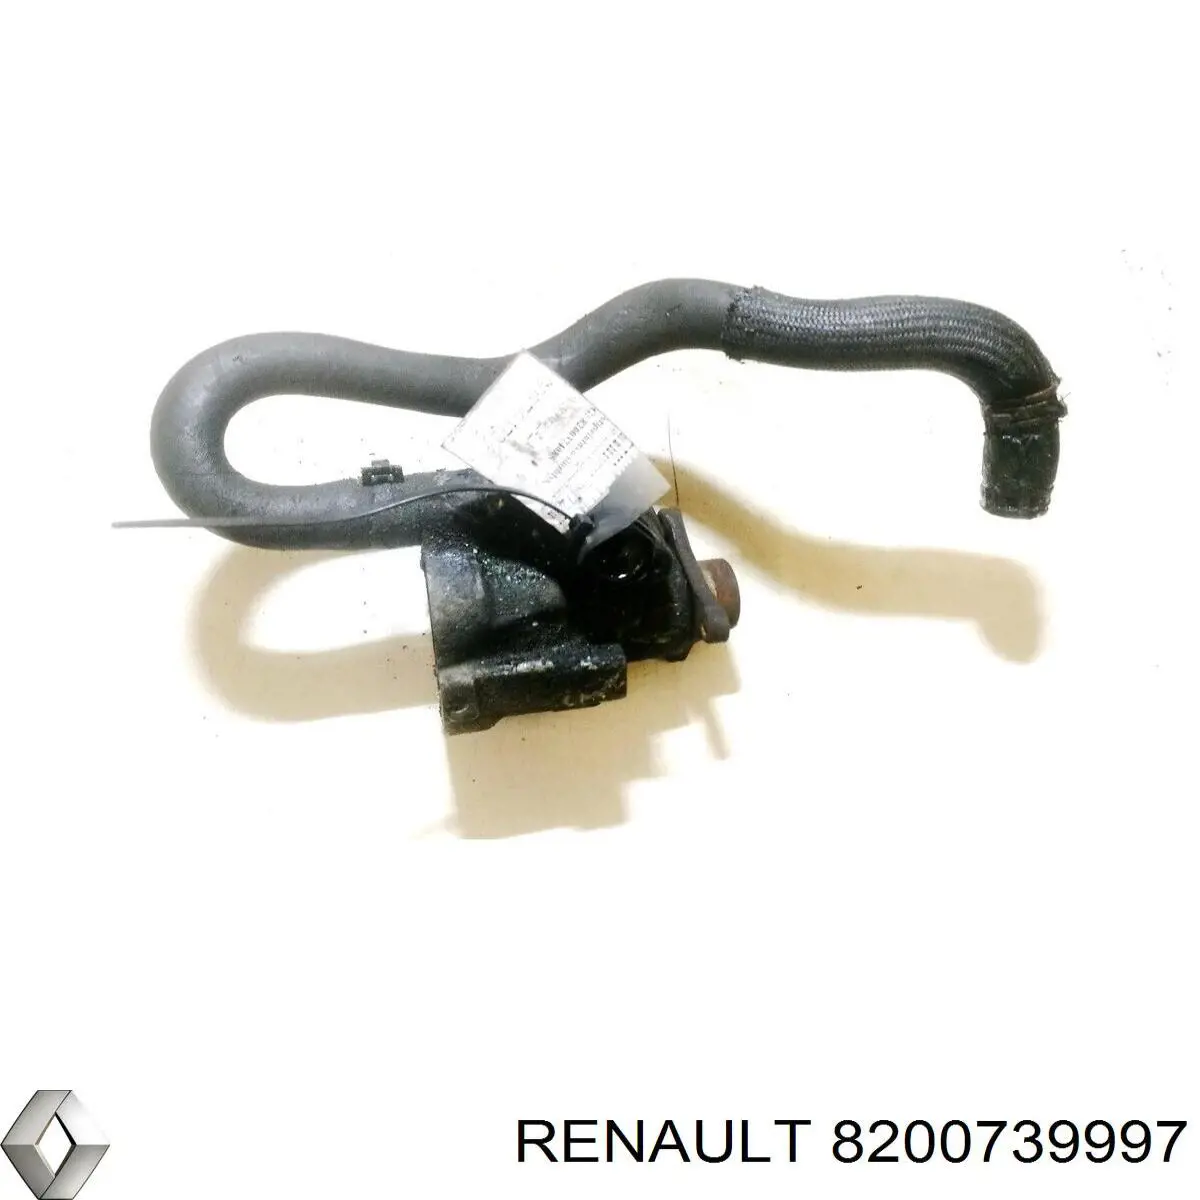 8200739997 Renault (RVI) cubo da polia de bomba de impulsionador hidráulico (direção hidrâulica assistida)